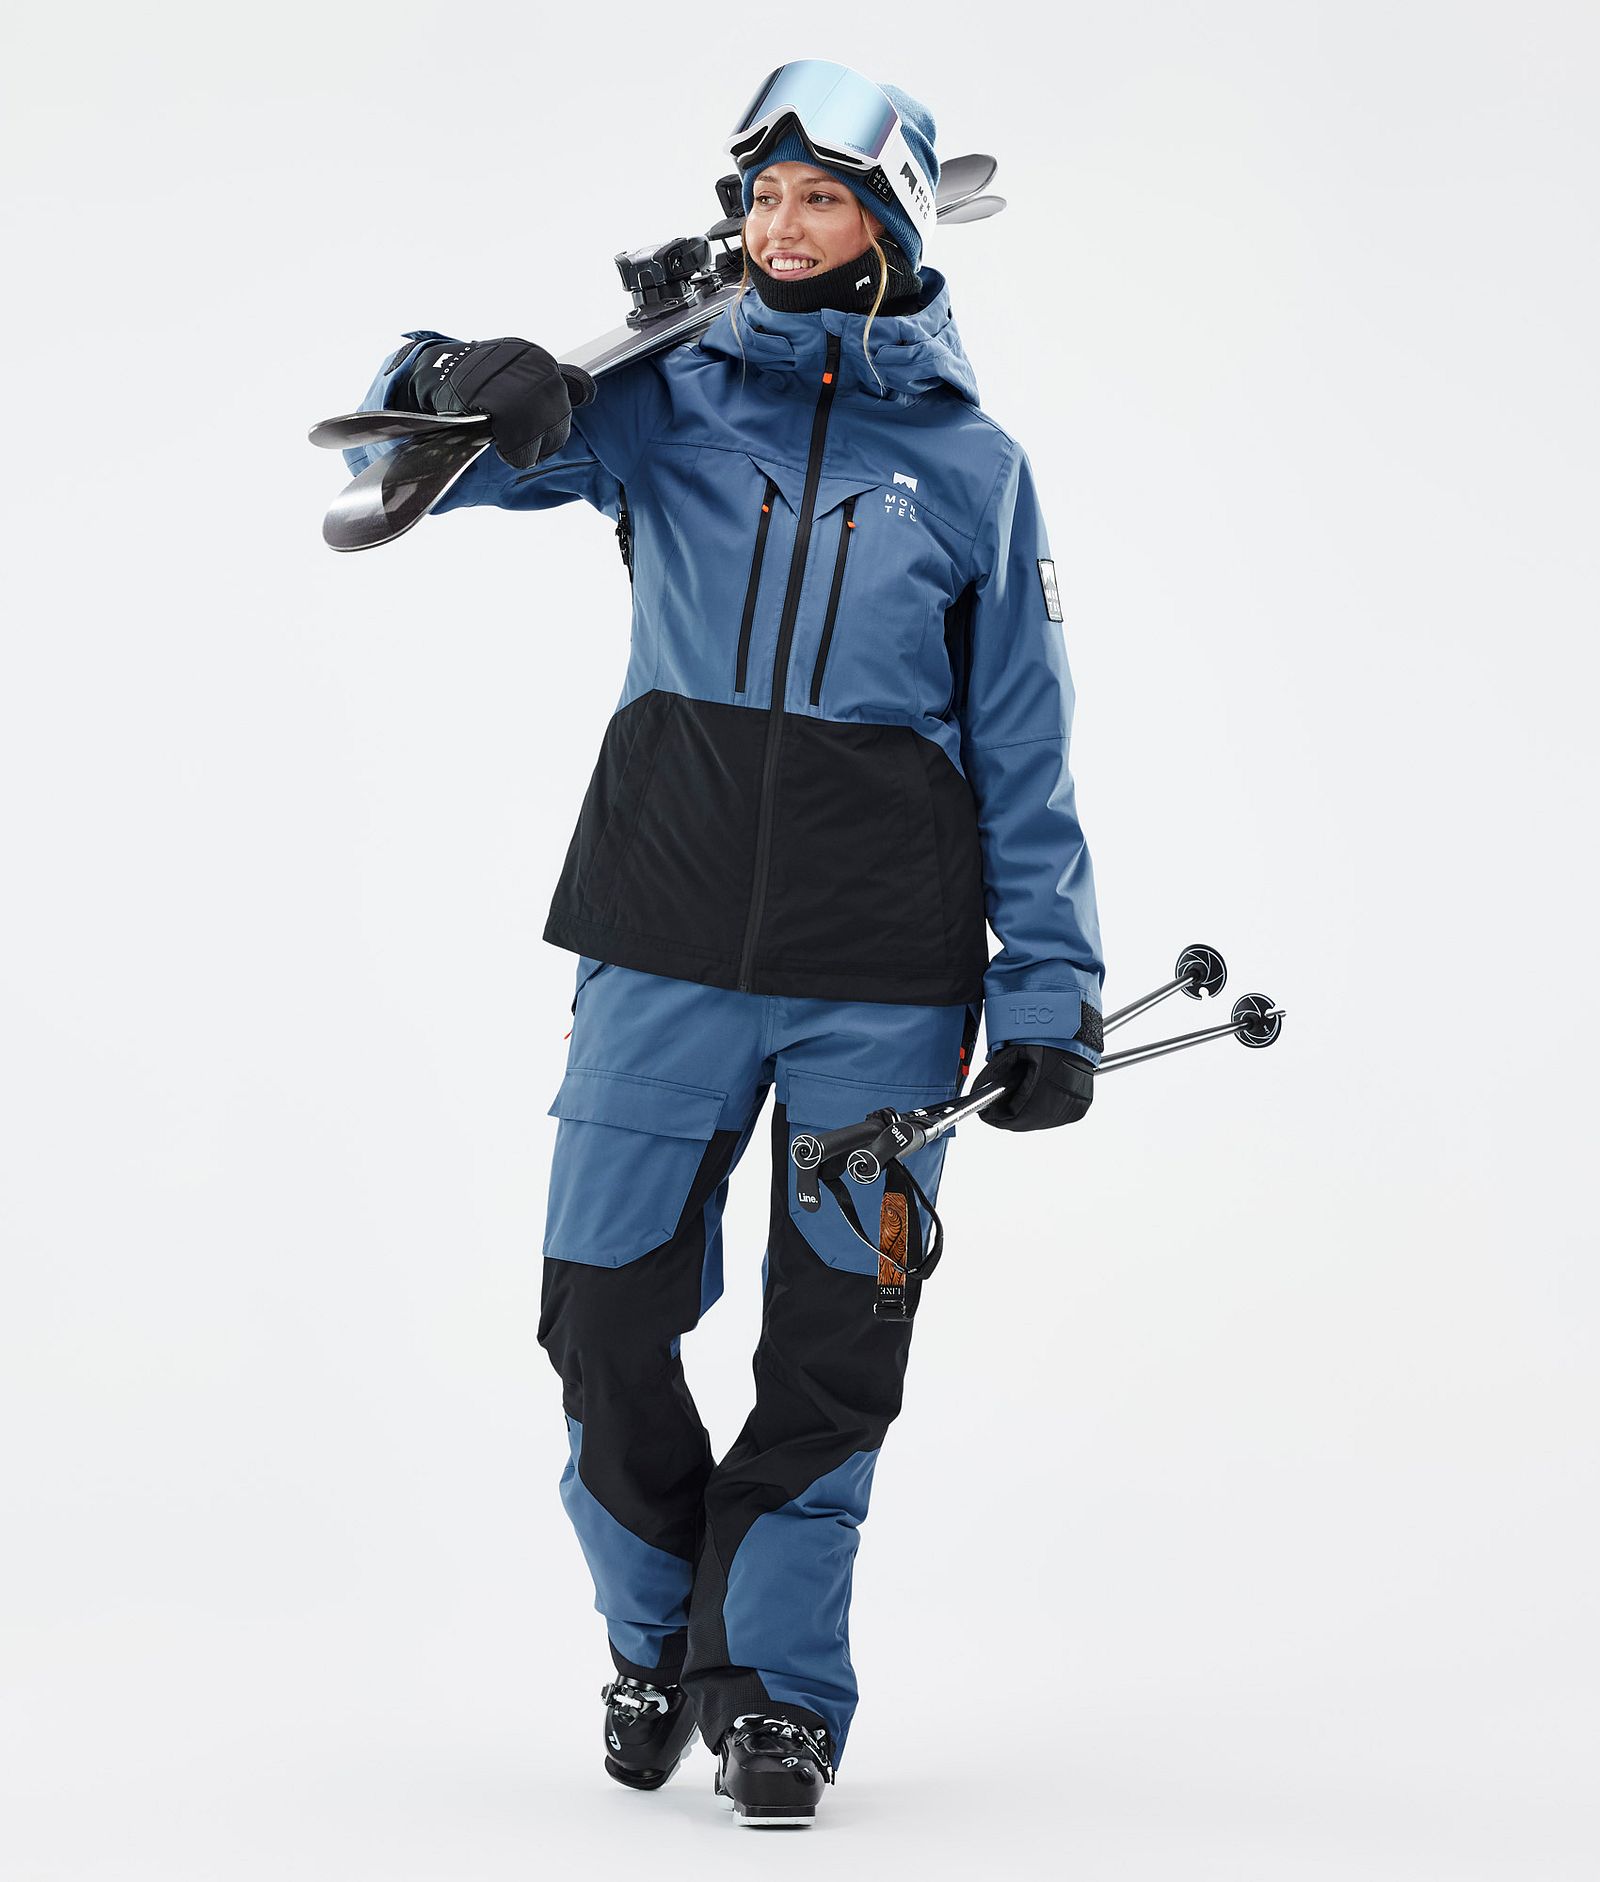 Montec Fawk W Ski Pants Women Blue Steel/Black | Montecwear.com